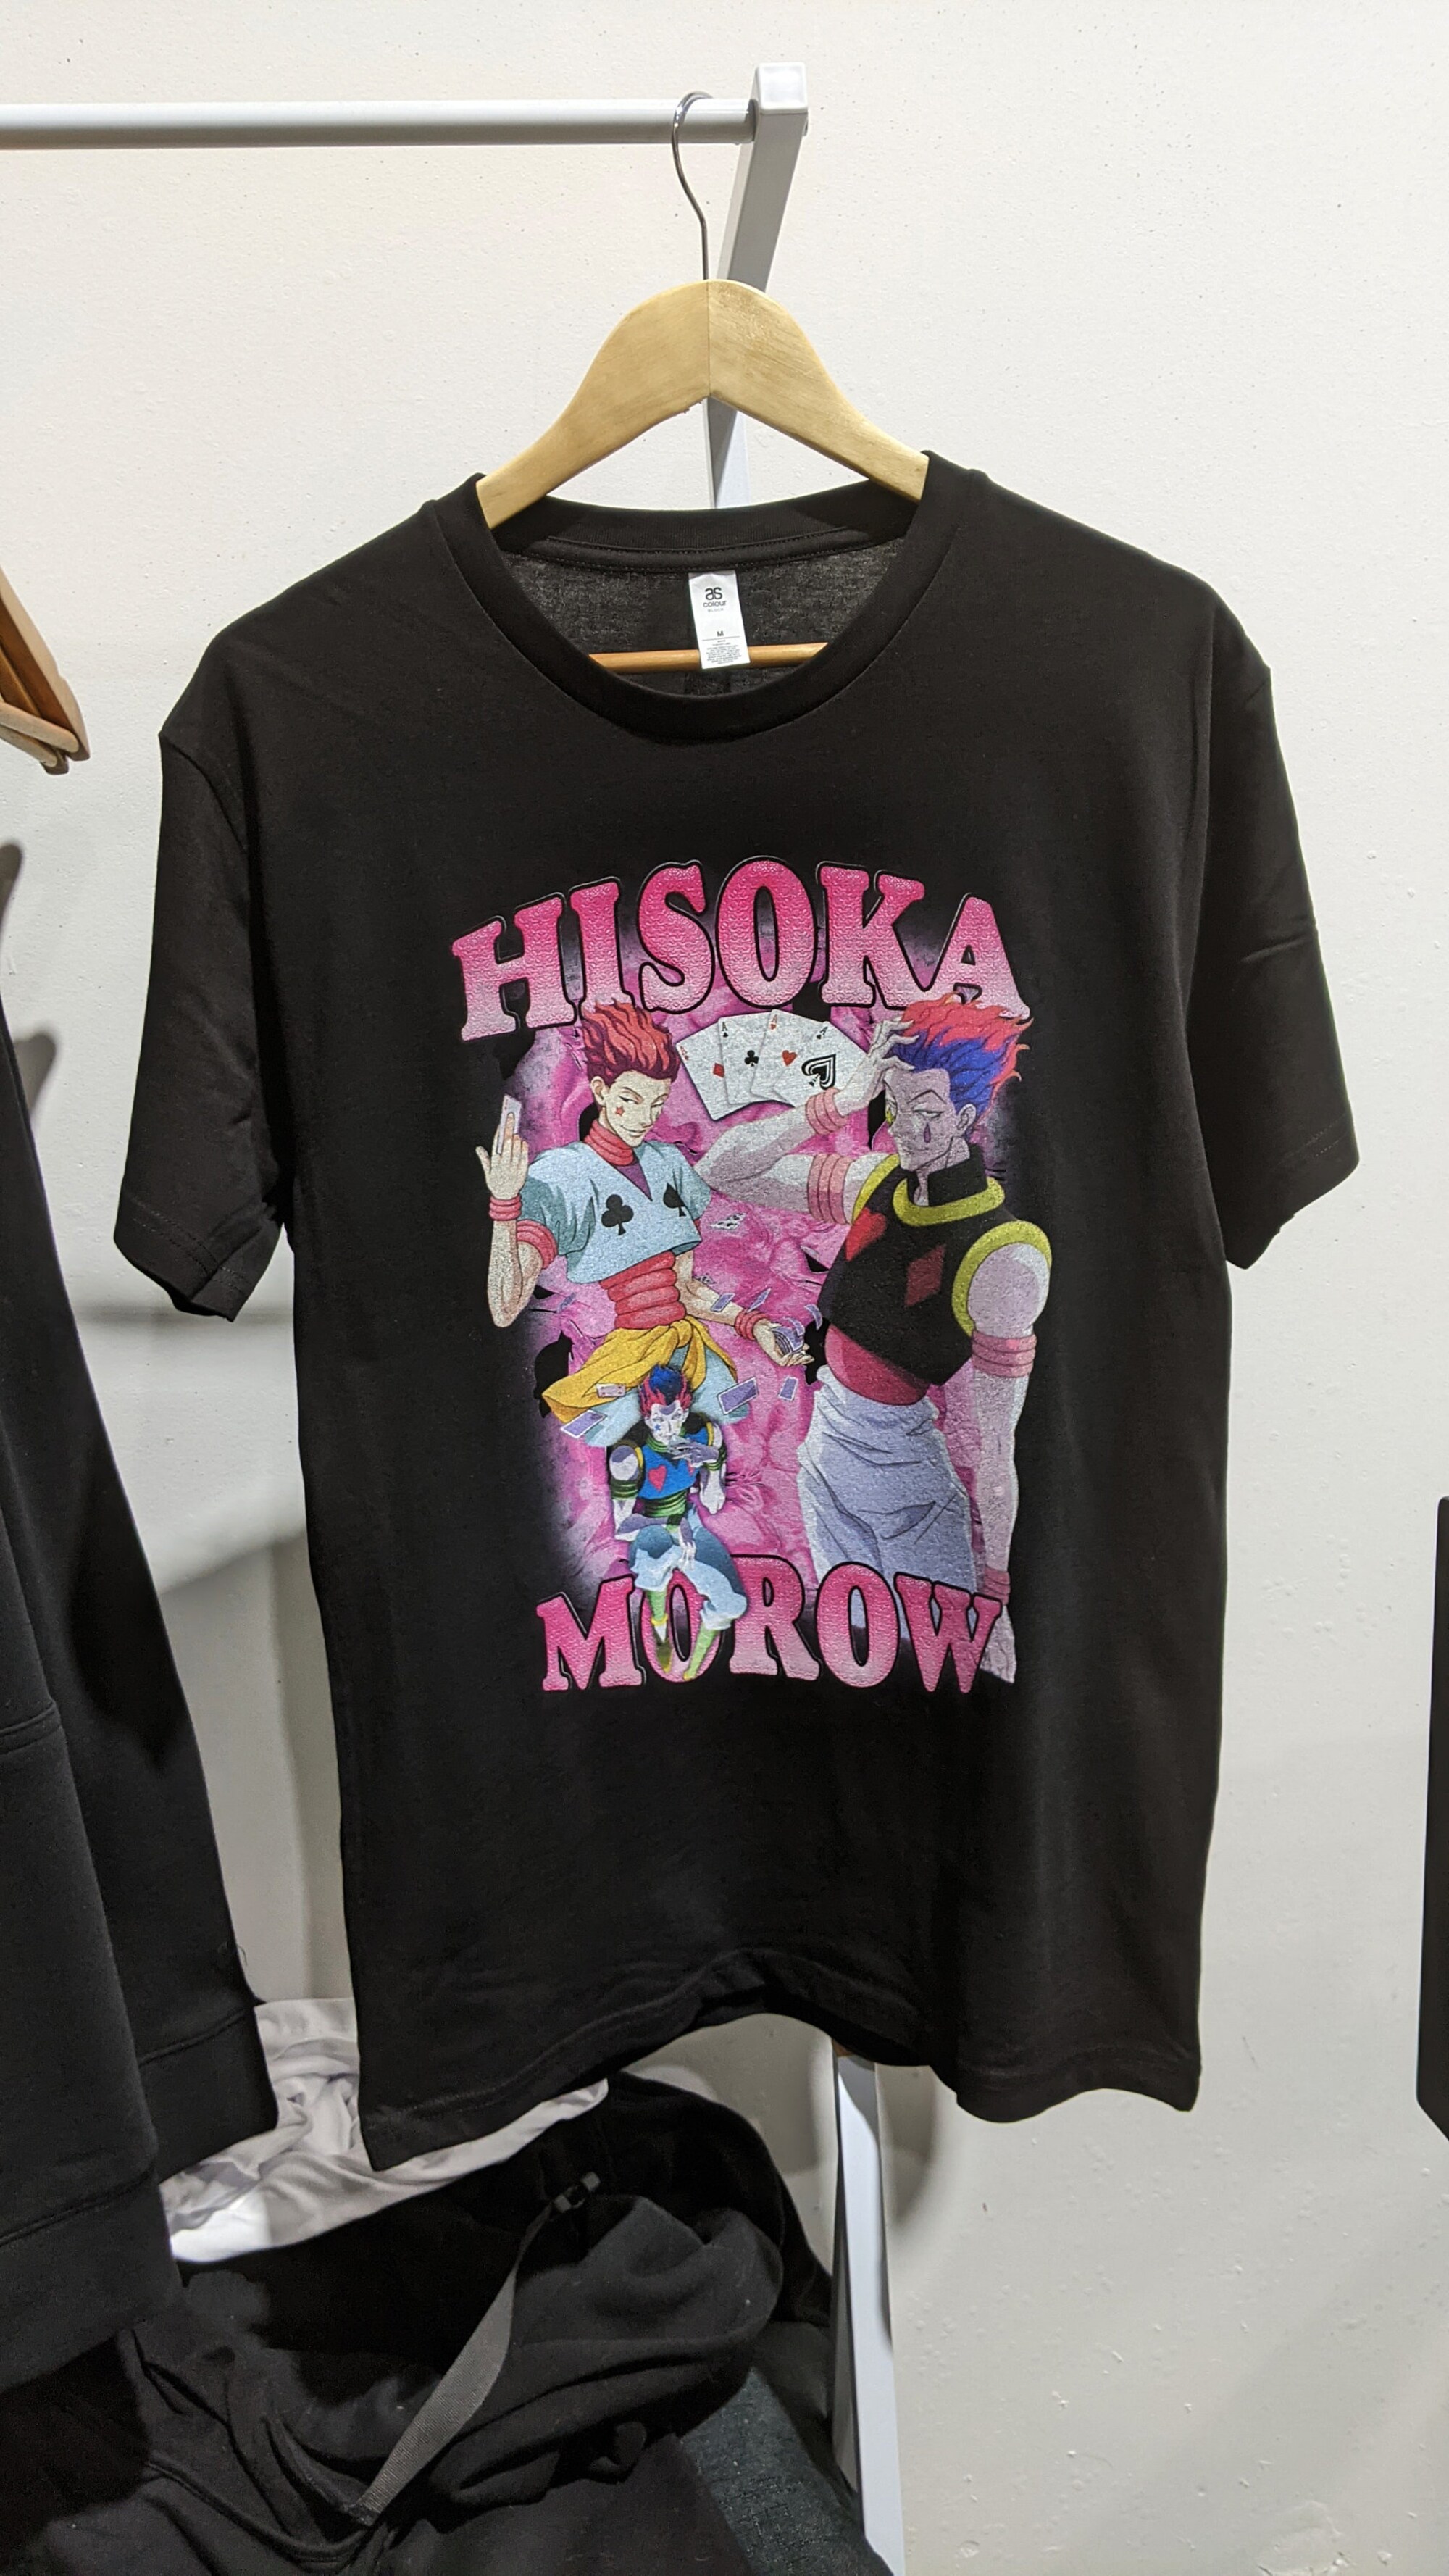 Discover Hisoka Morow Anime Vintage Style T-Shirt!